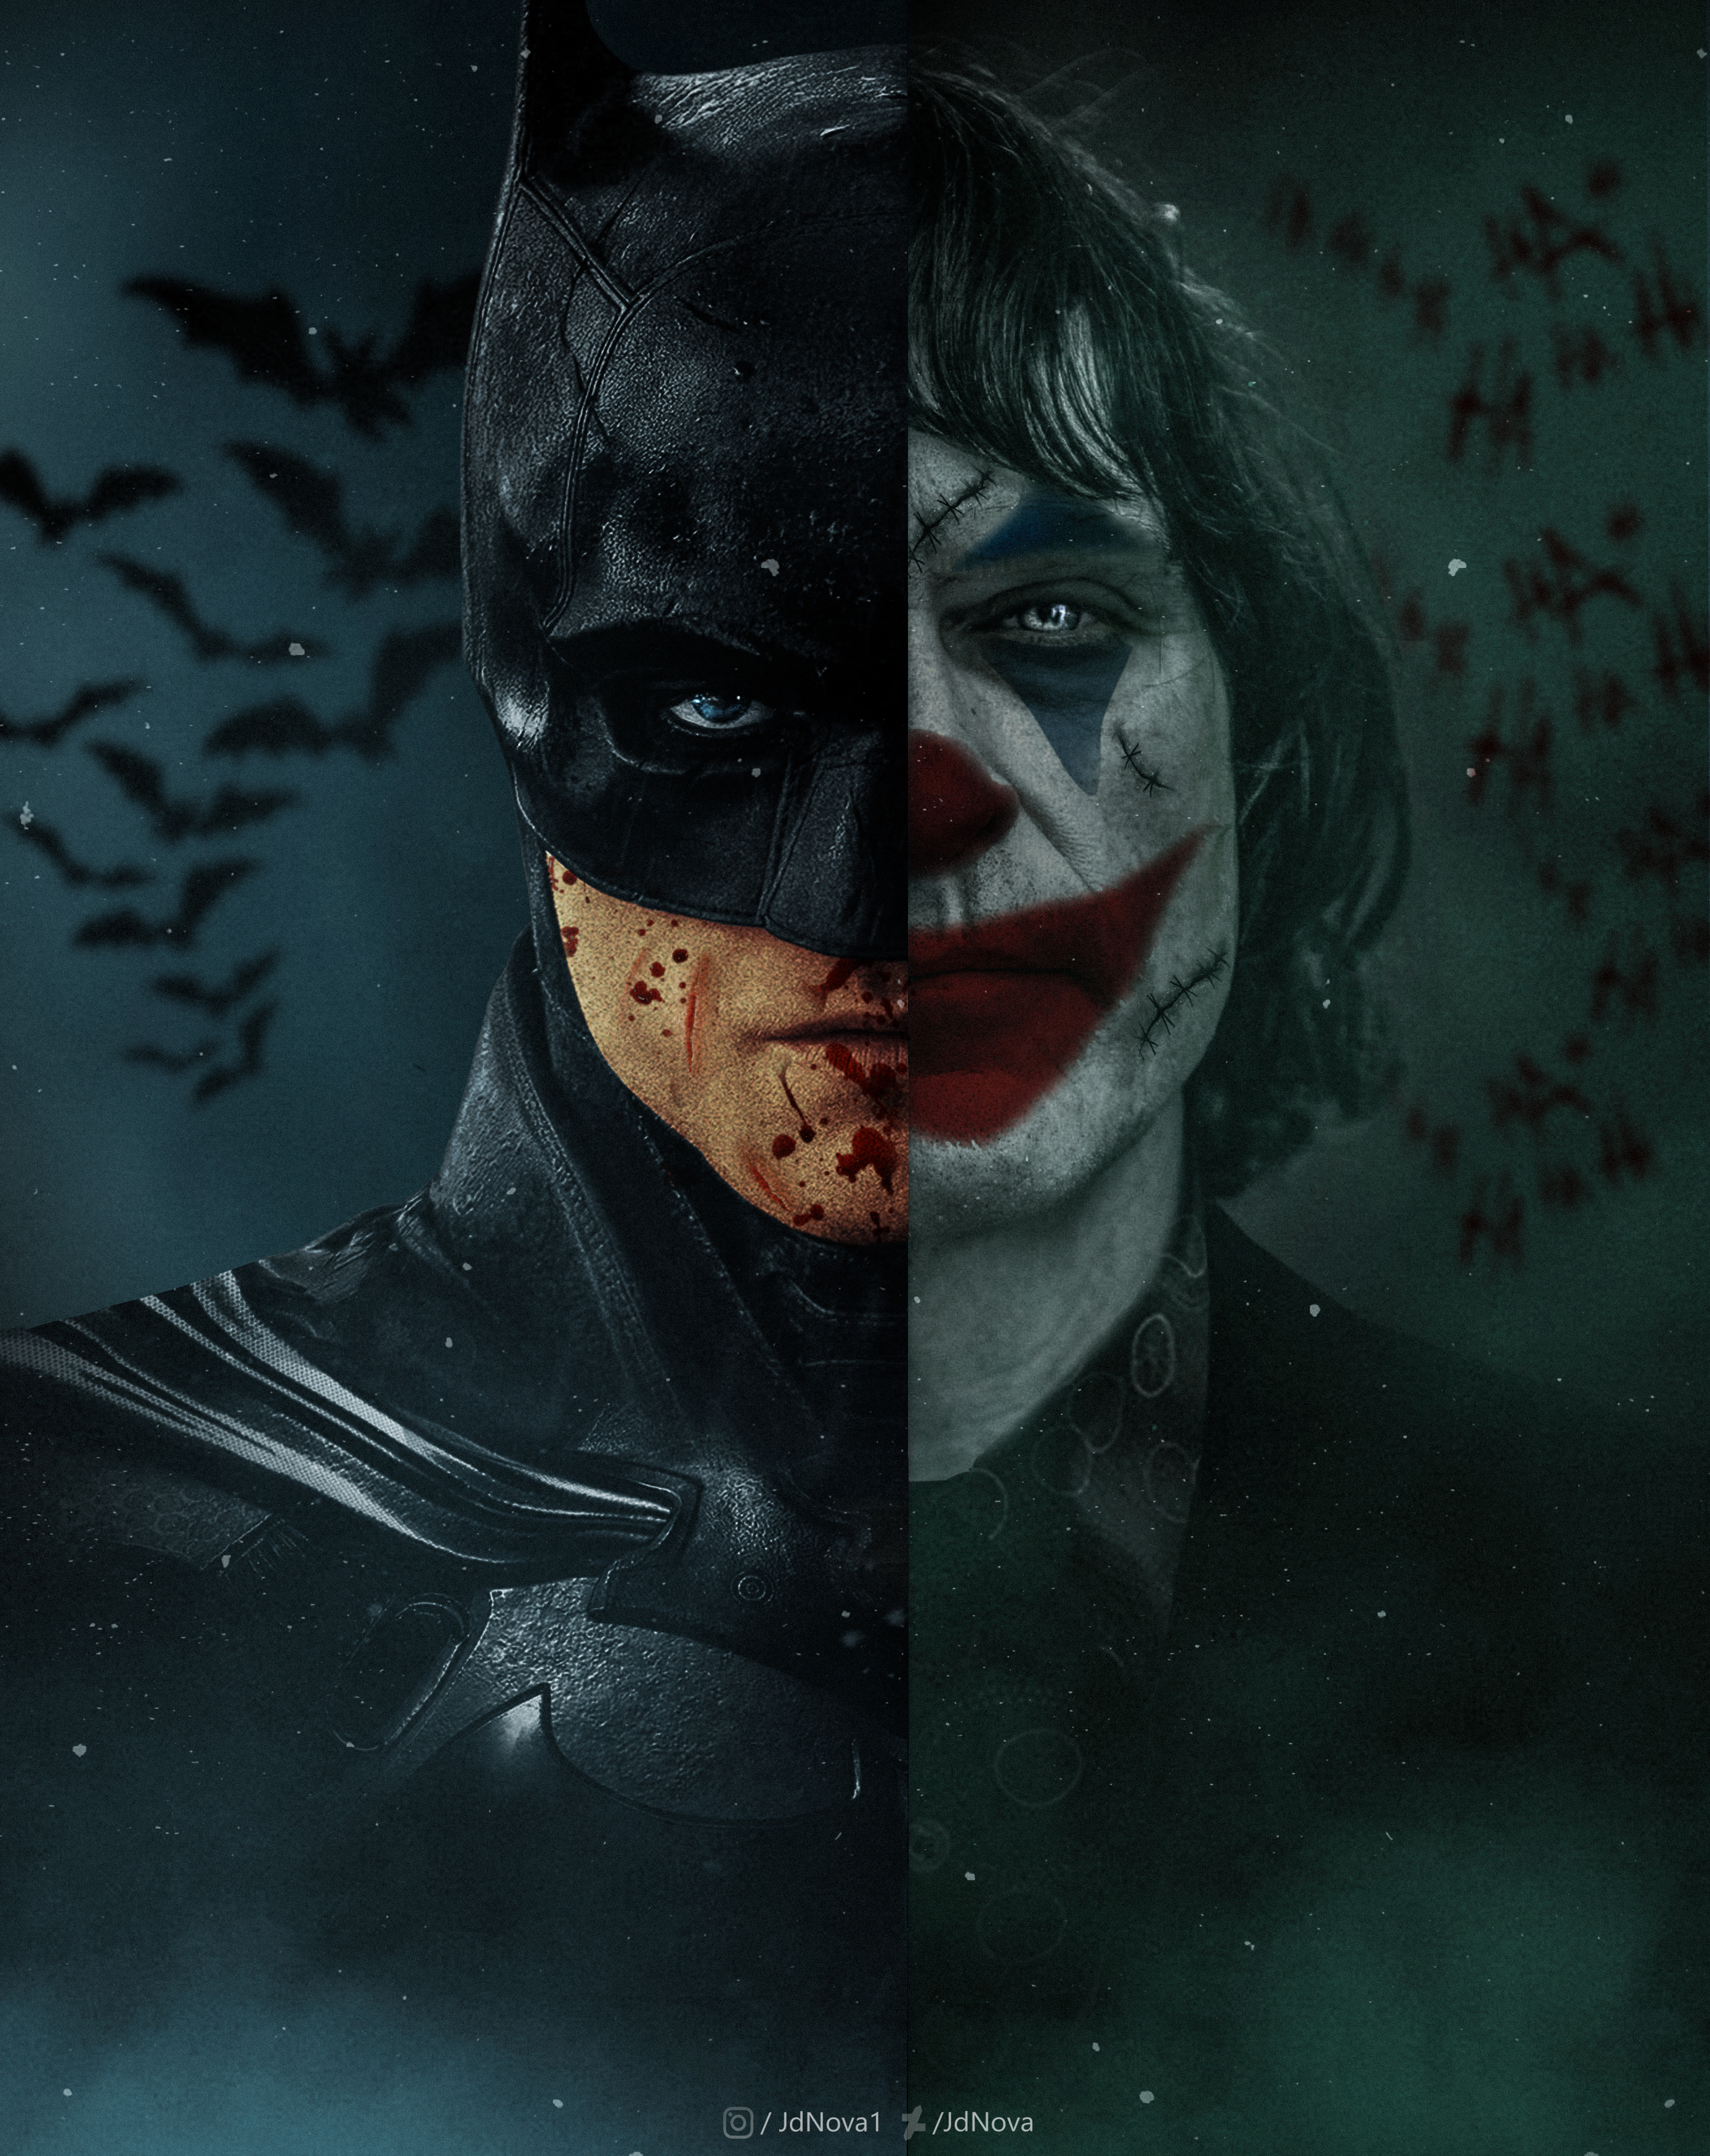 Batman vs Joker by JdNova on DeviantArt